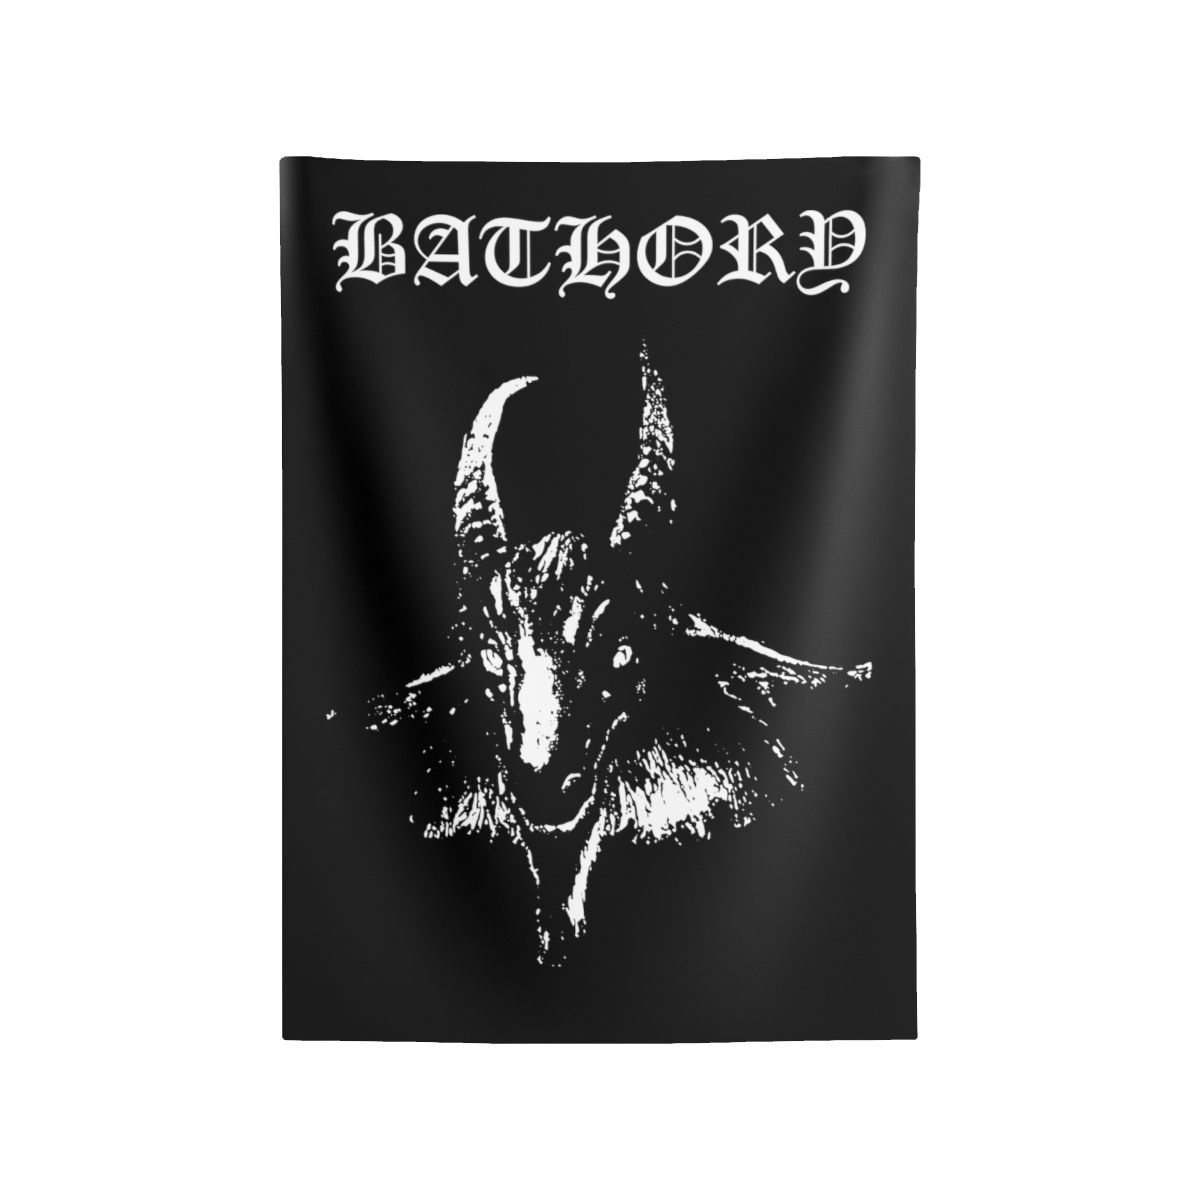 Bathory Bathory Black Metal Textile Poster Flag